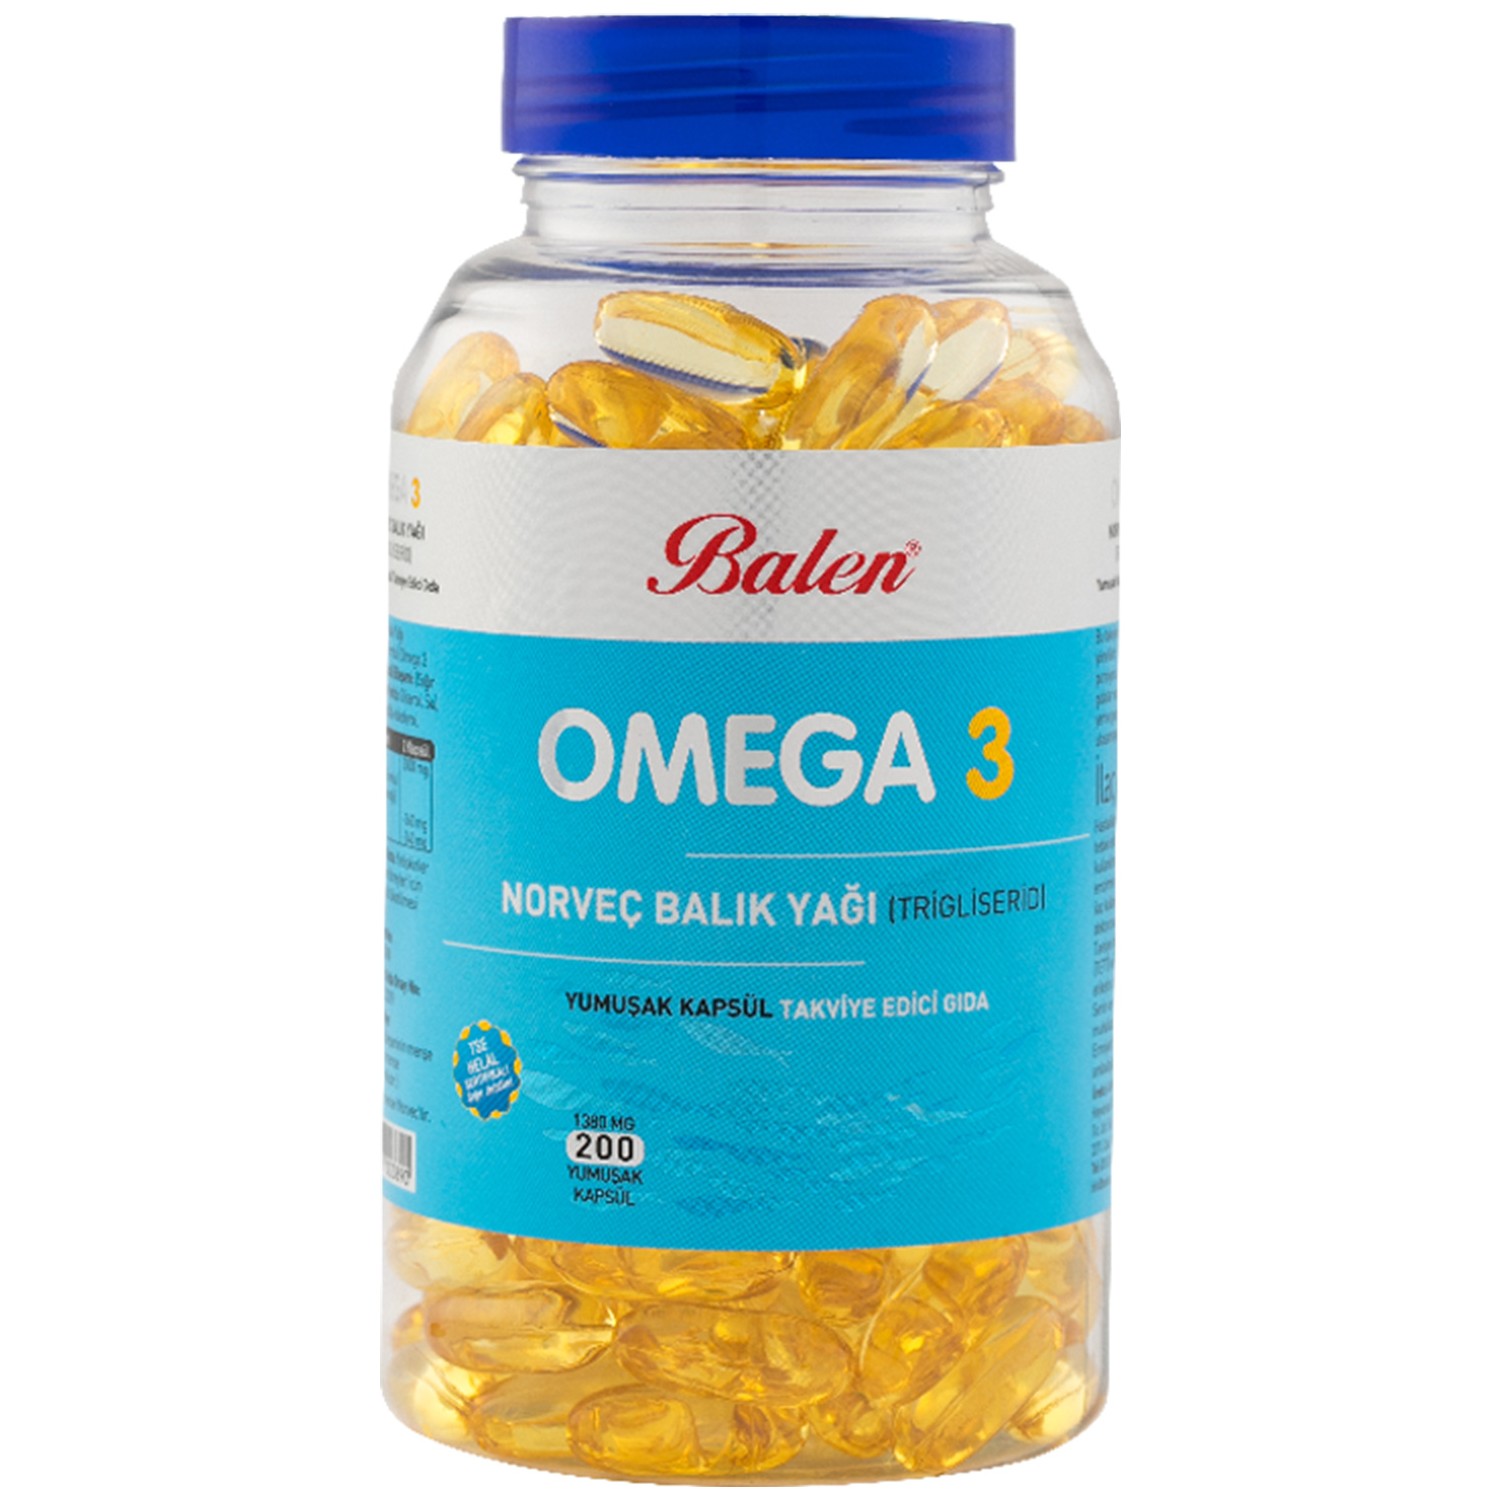 цена Норвежский рыбий жир Balen Omega-3 (триглицерид) 1380 мг, 200 капсул